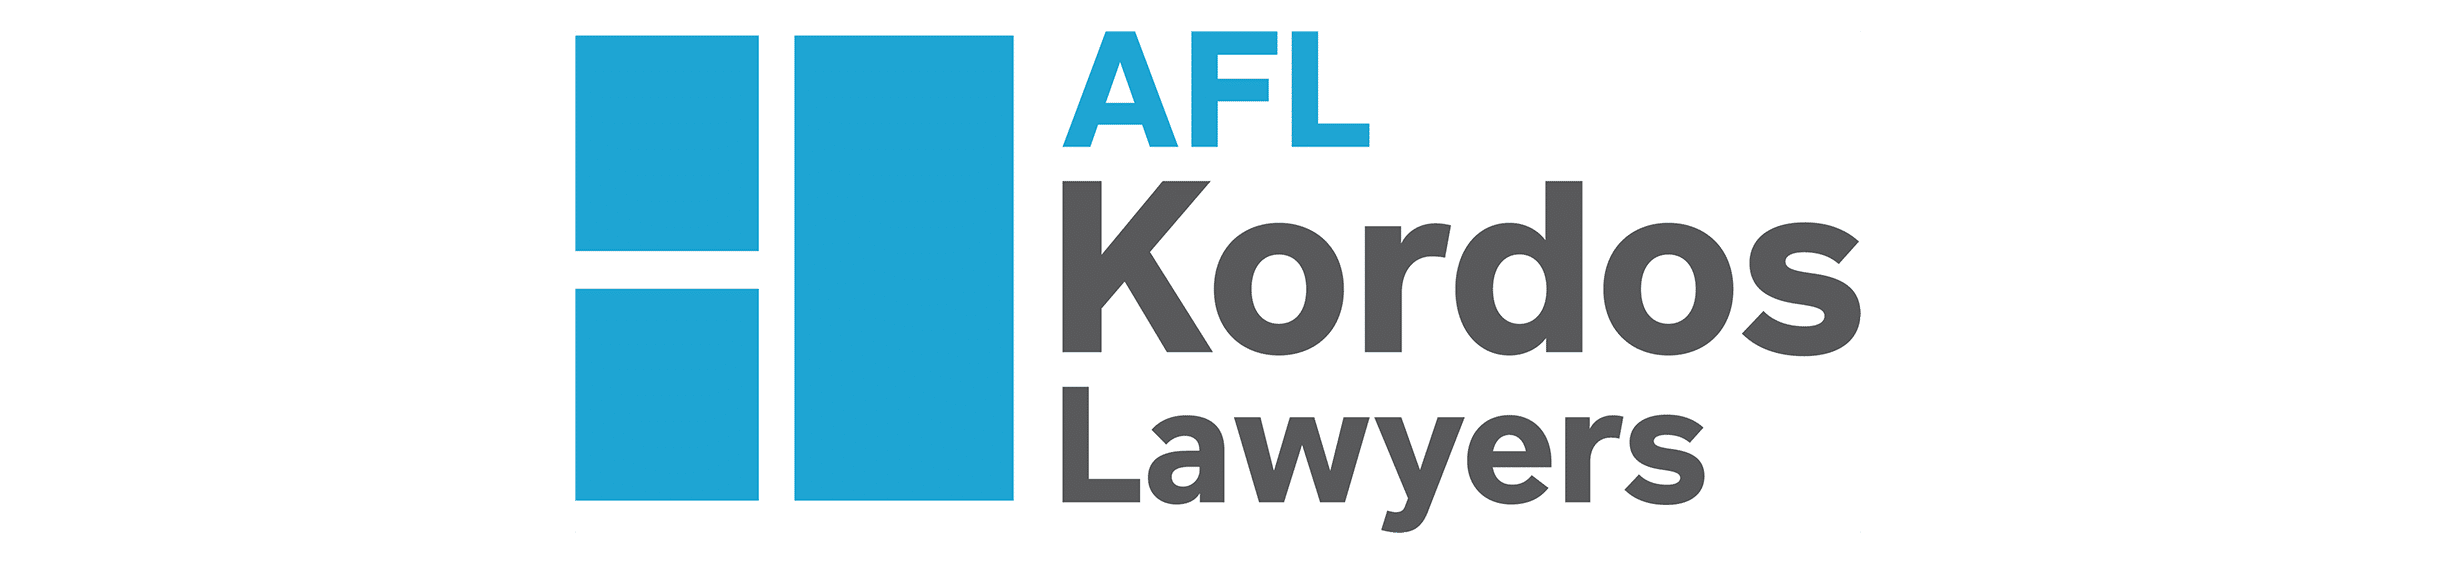  Australian Family Lawyers 